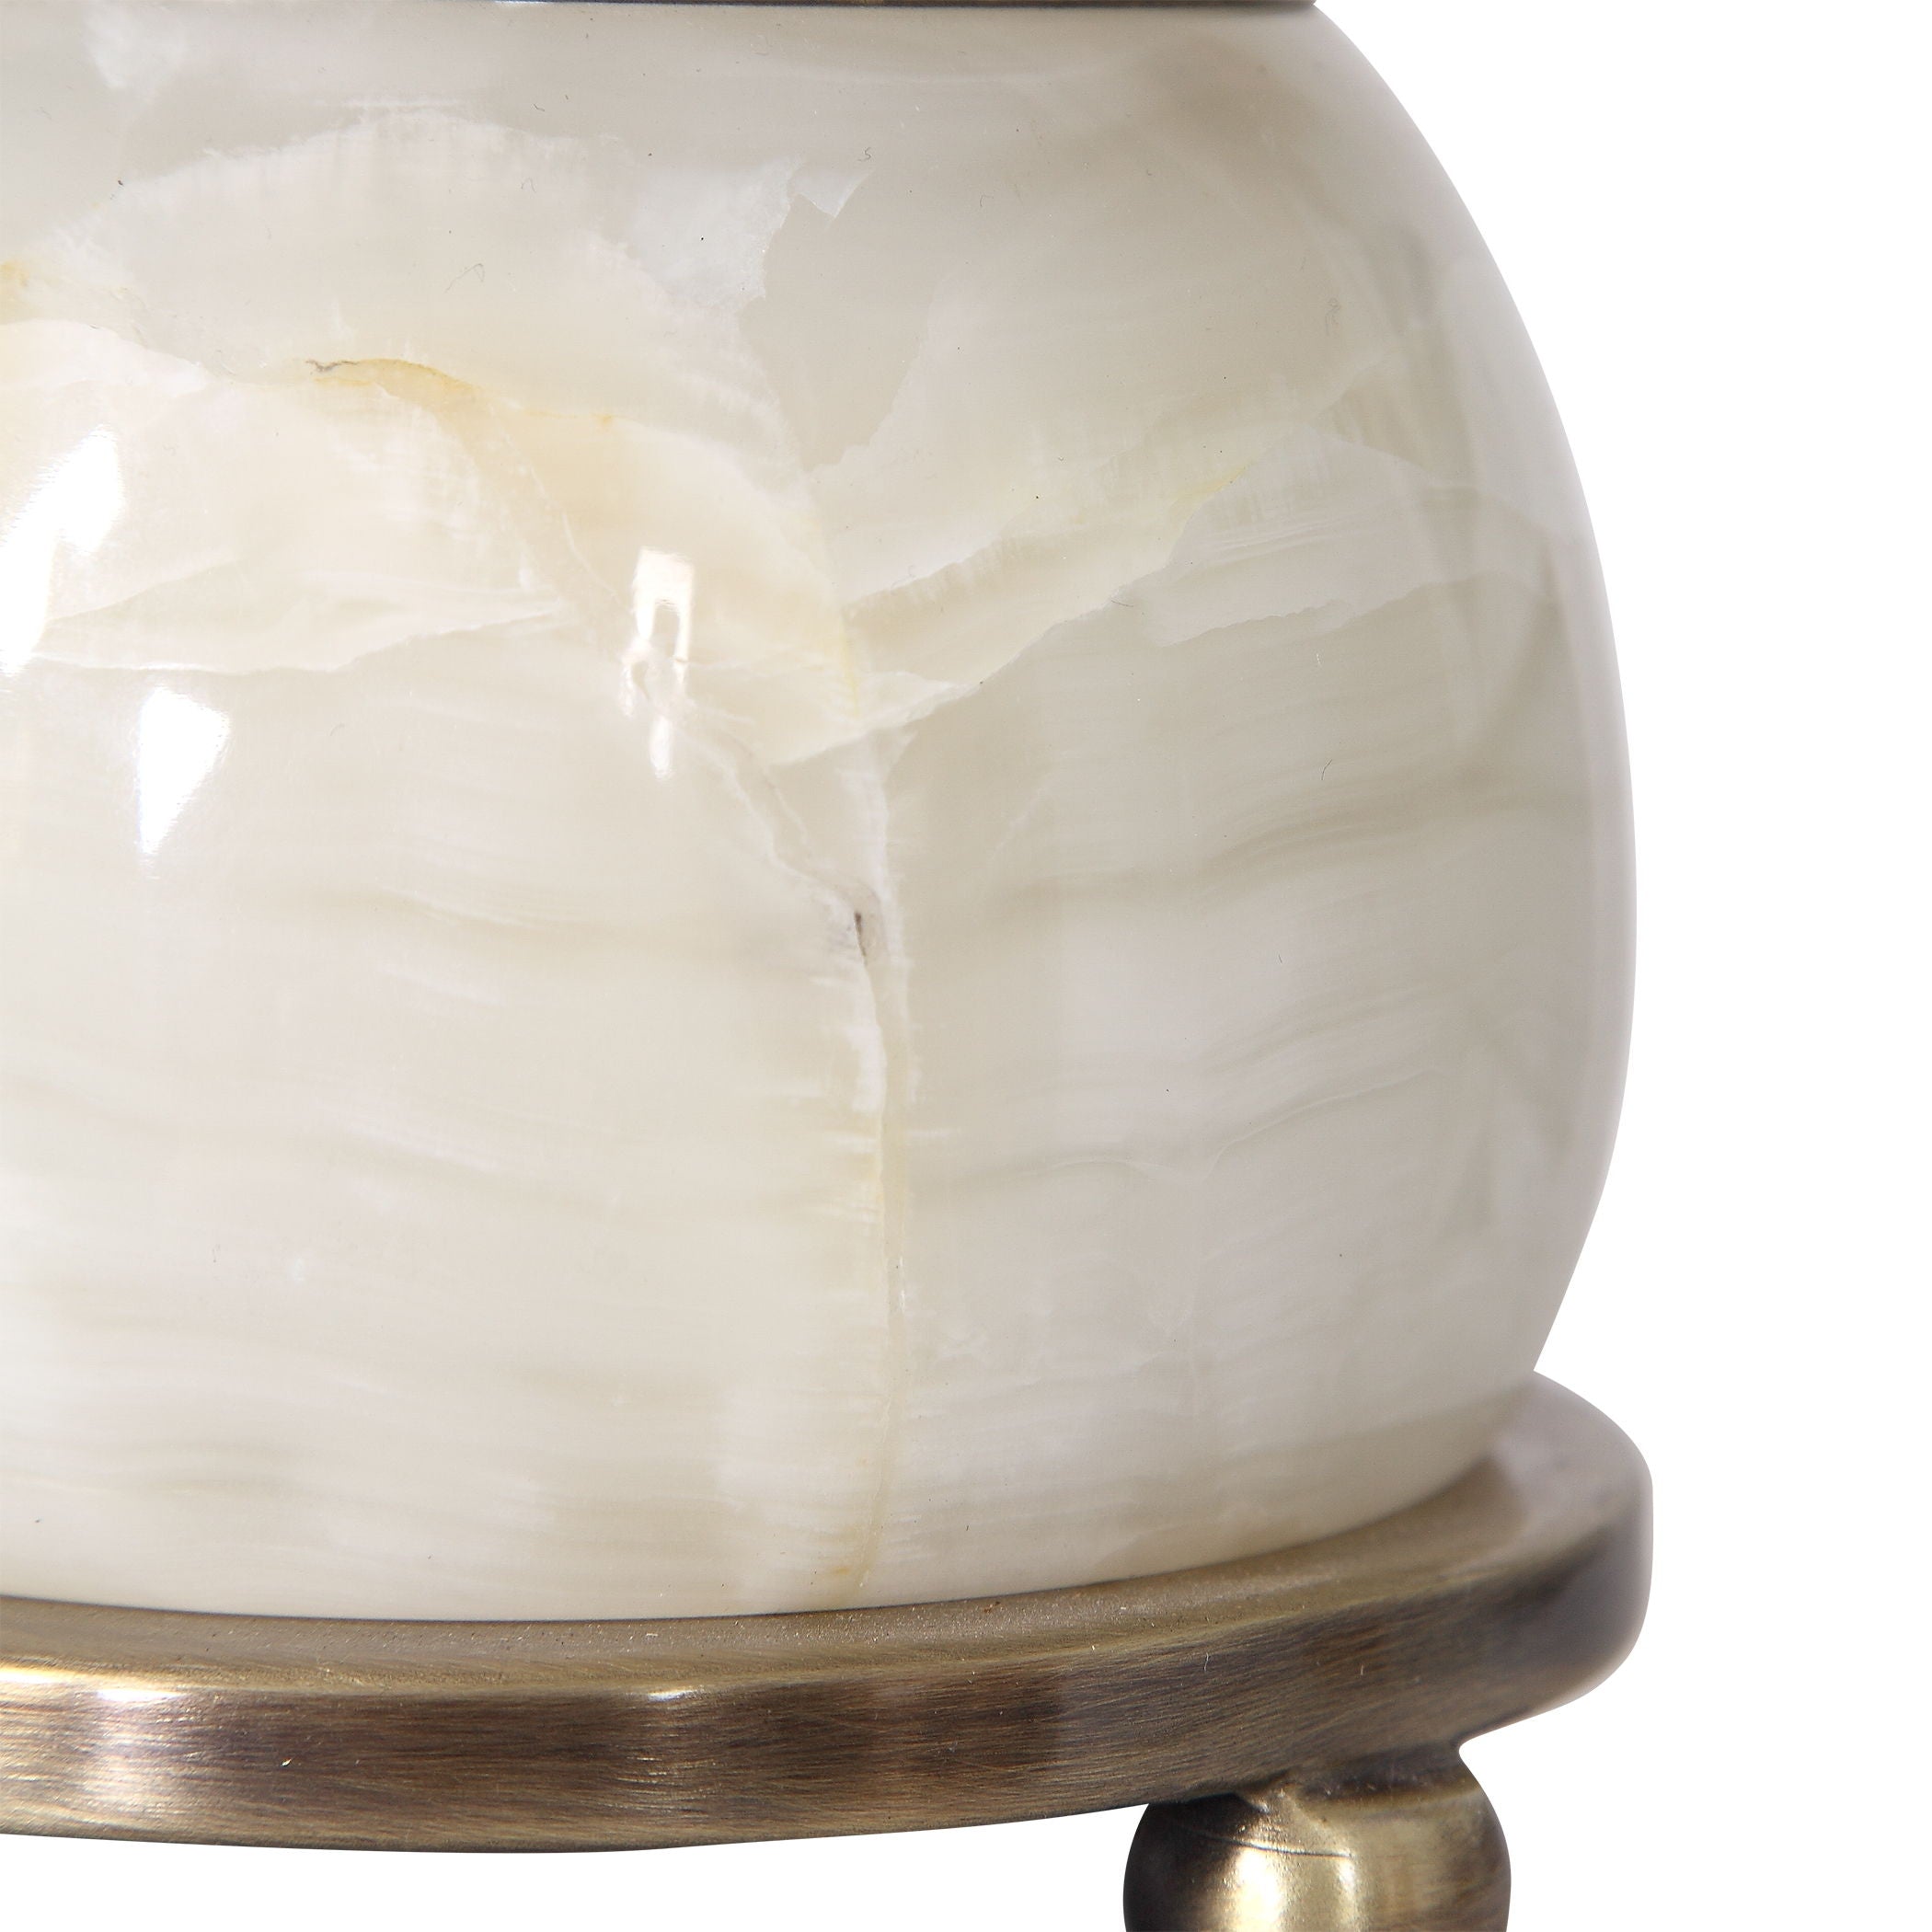 Minette - Mid-Century Buffet Lamp - White